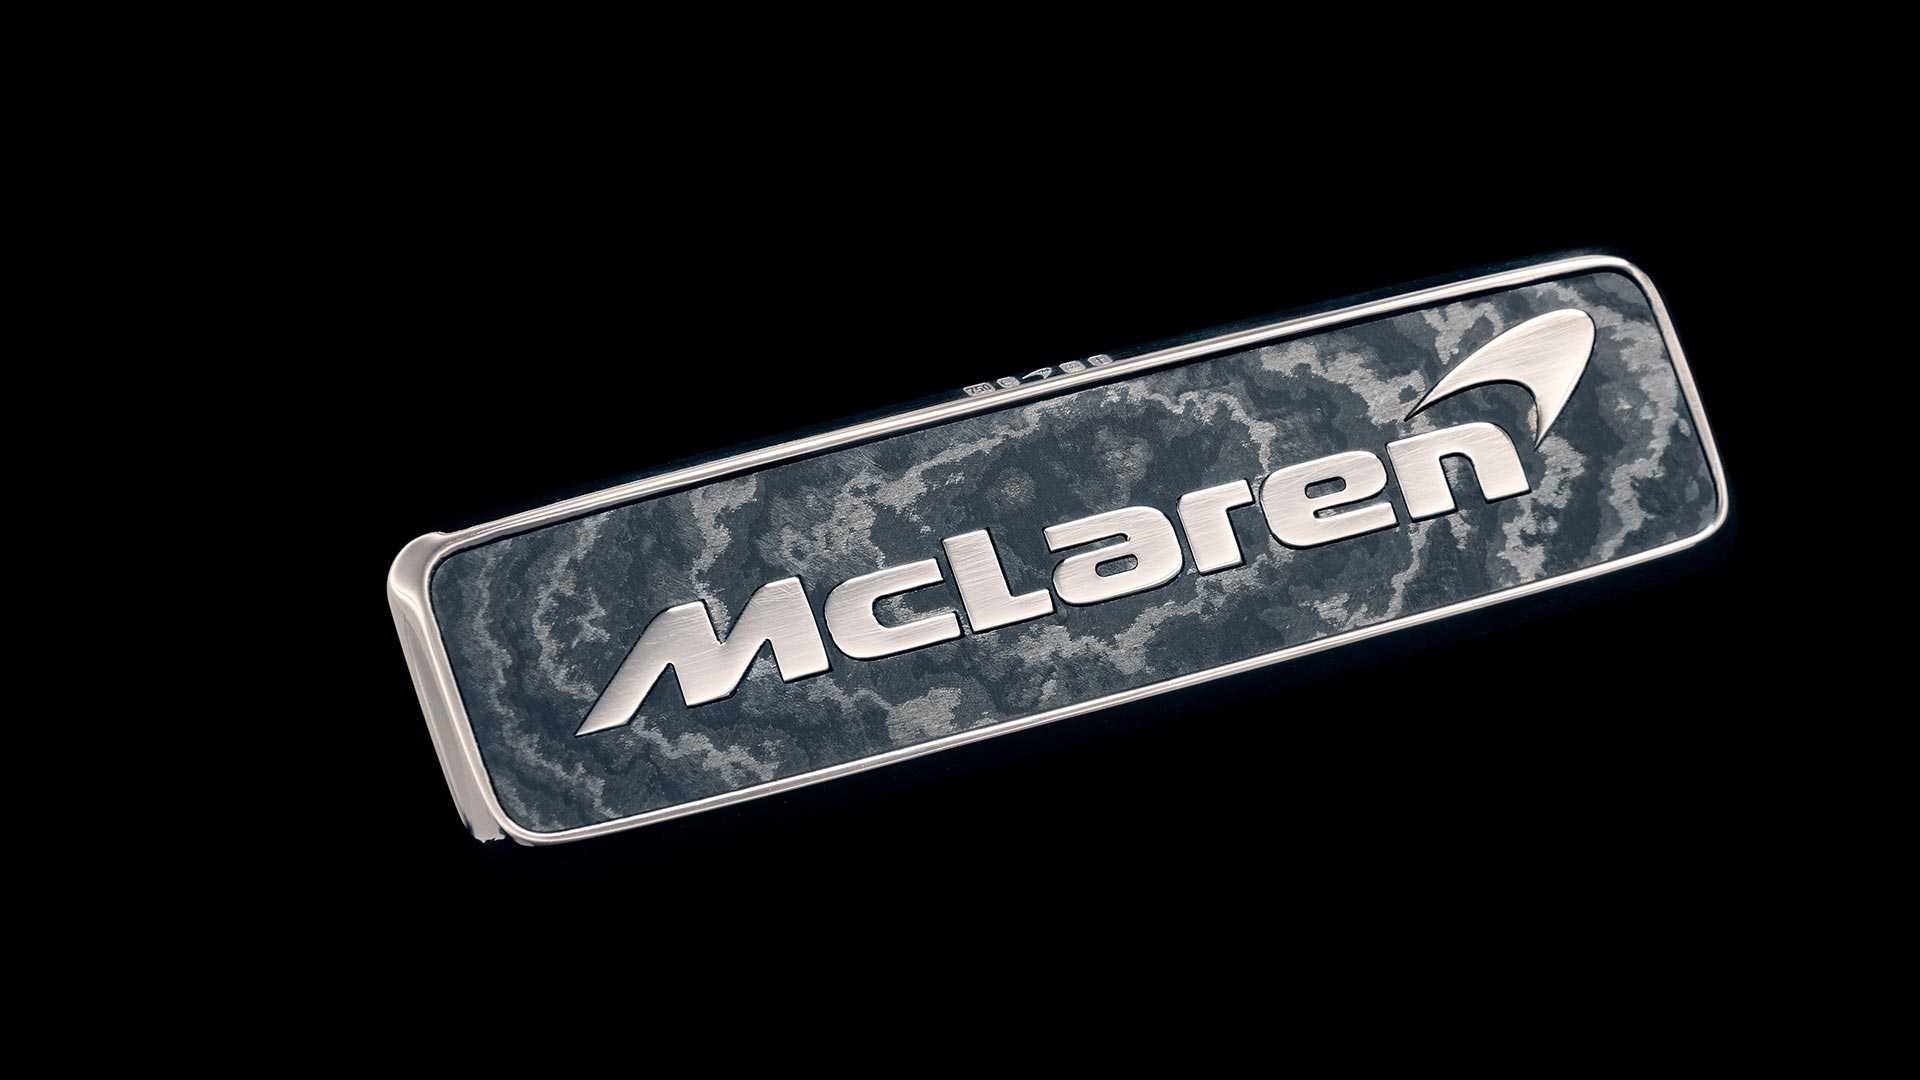 Mclaren Speedtail Available With Carat Gold Or Platinum Badges